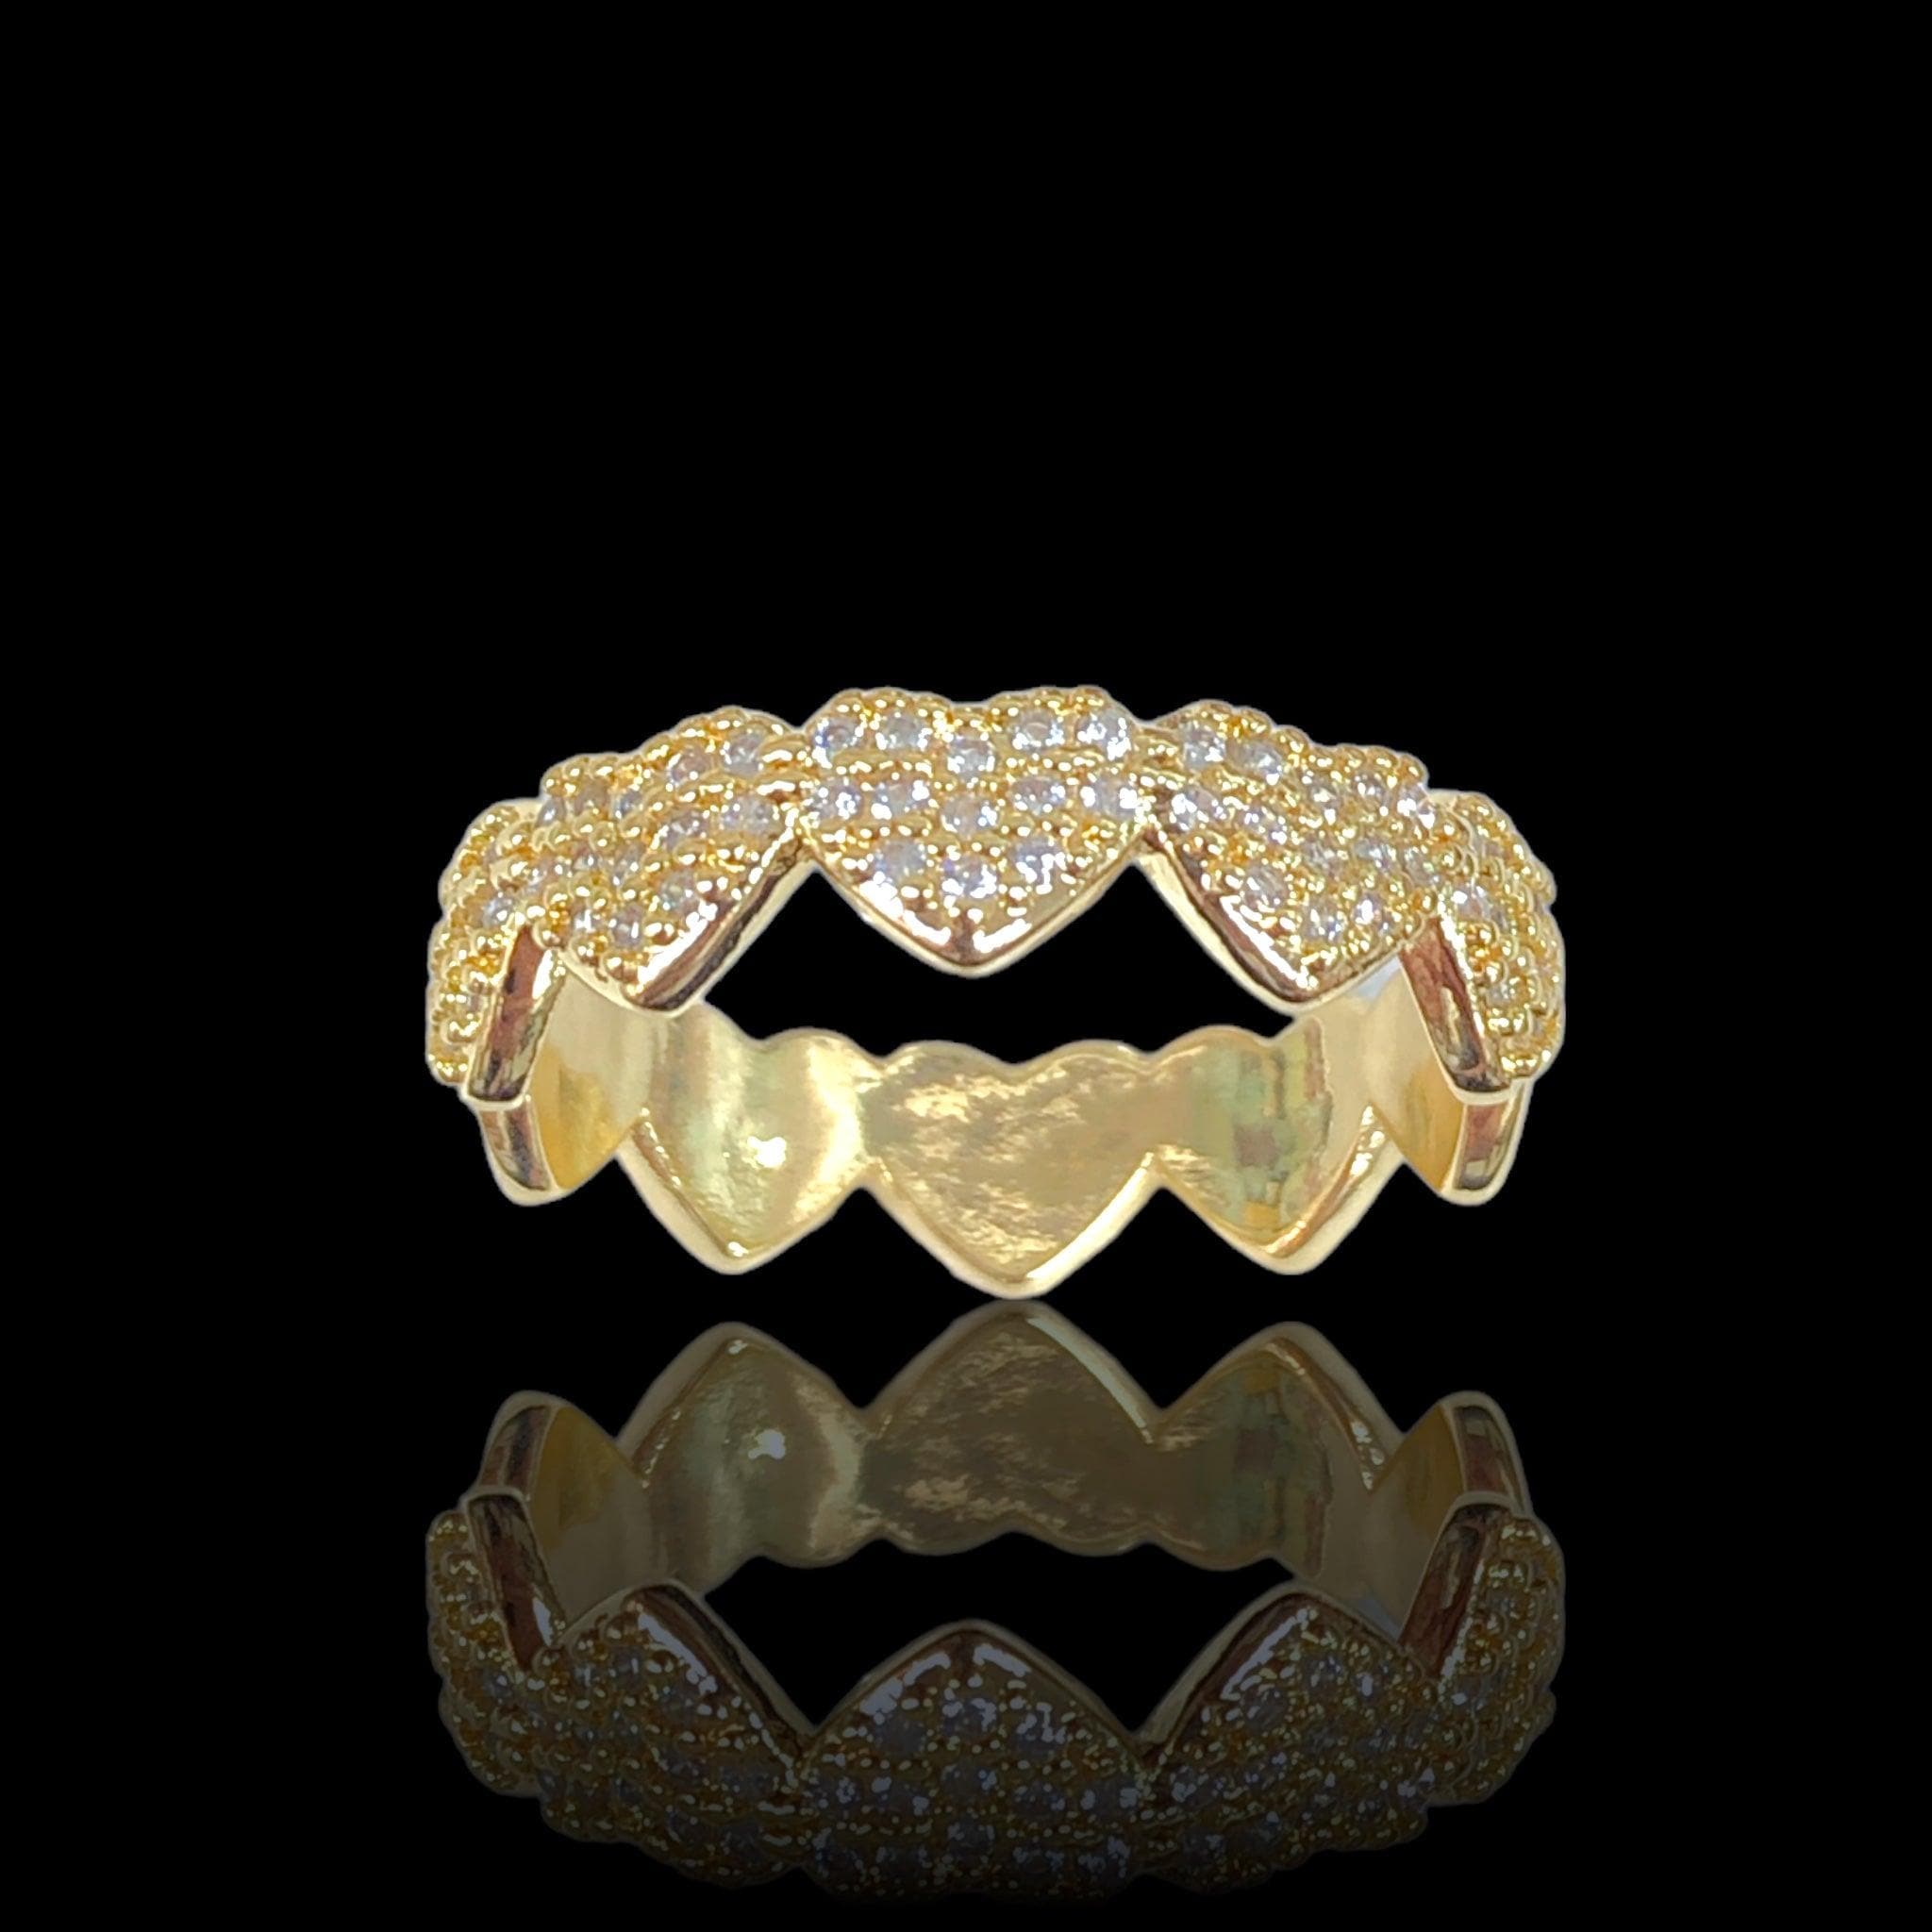 OLRA 0120 18K Gold Filled Eternal Heart Ring- kuania oro laminado